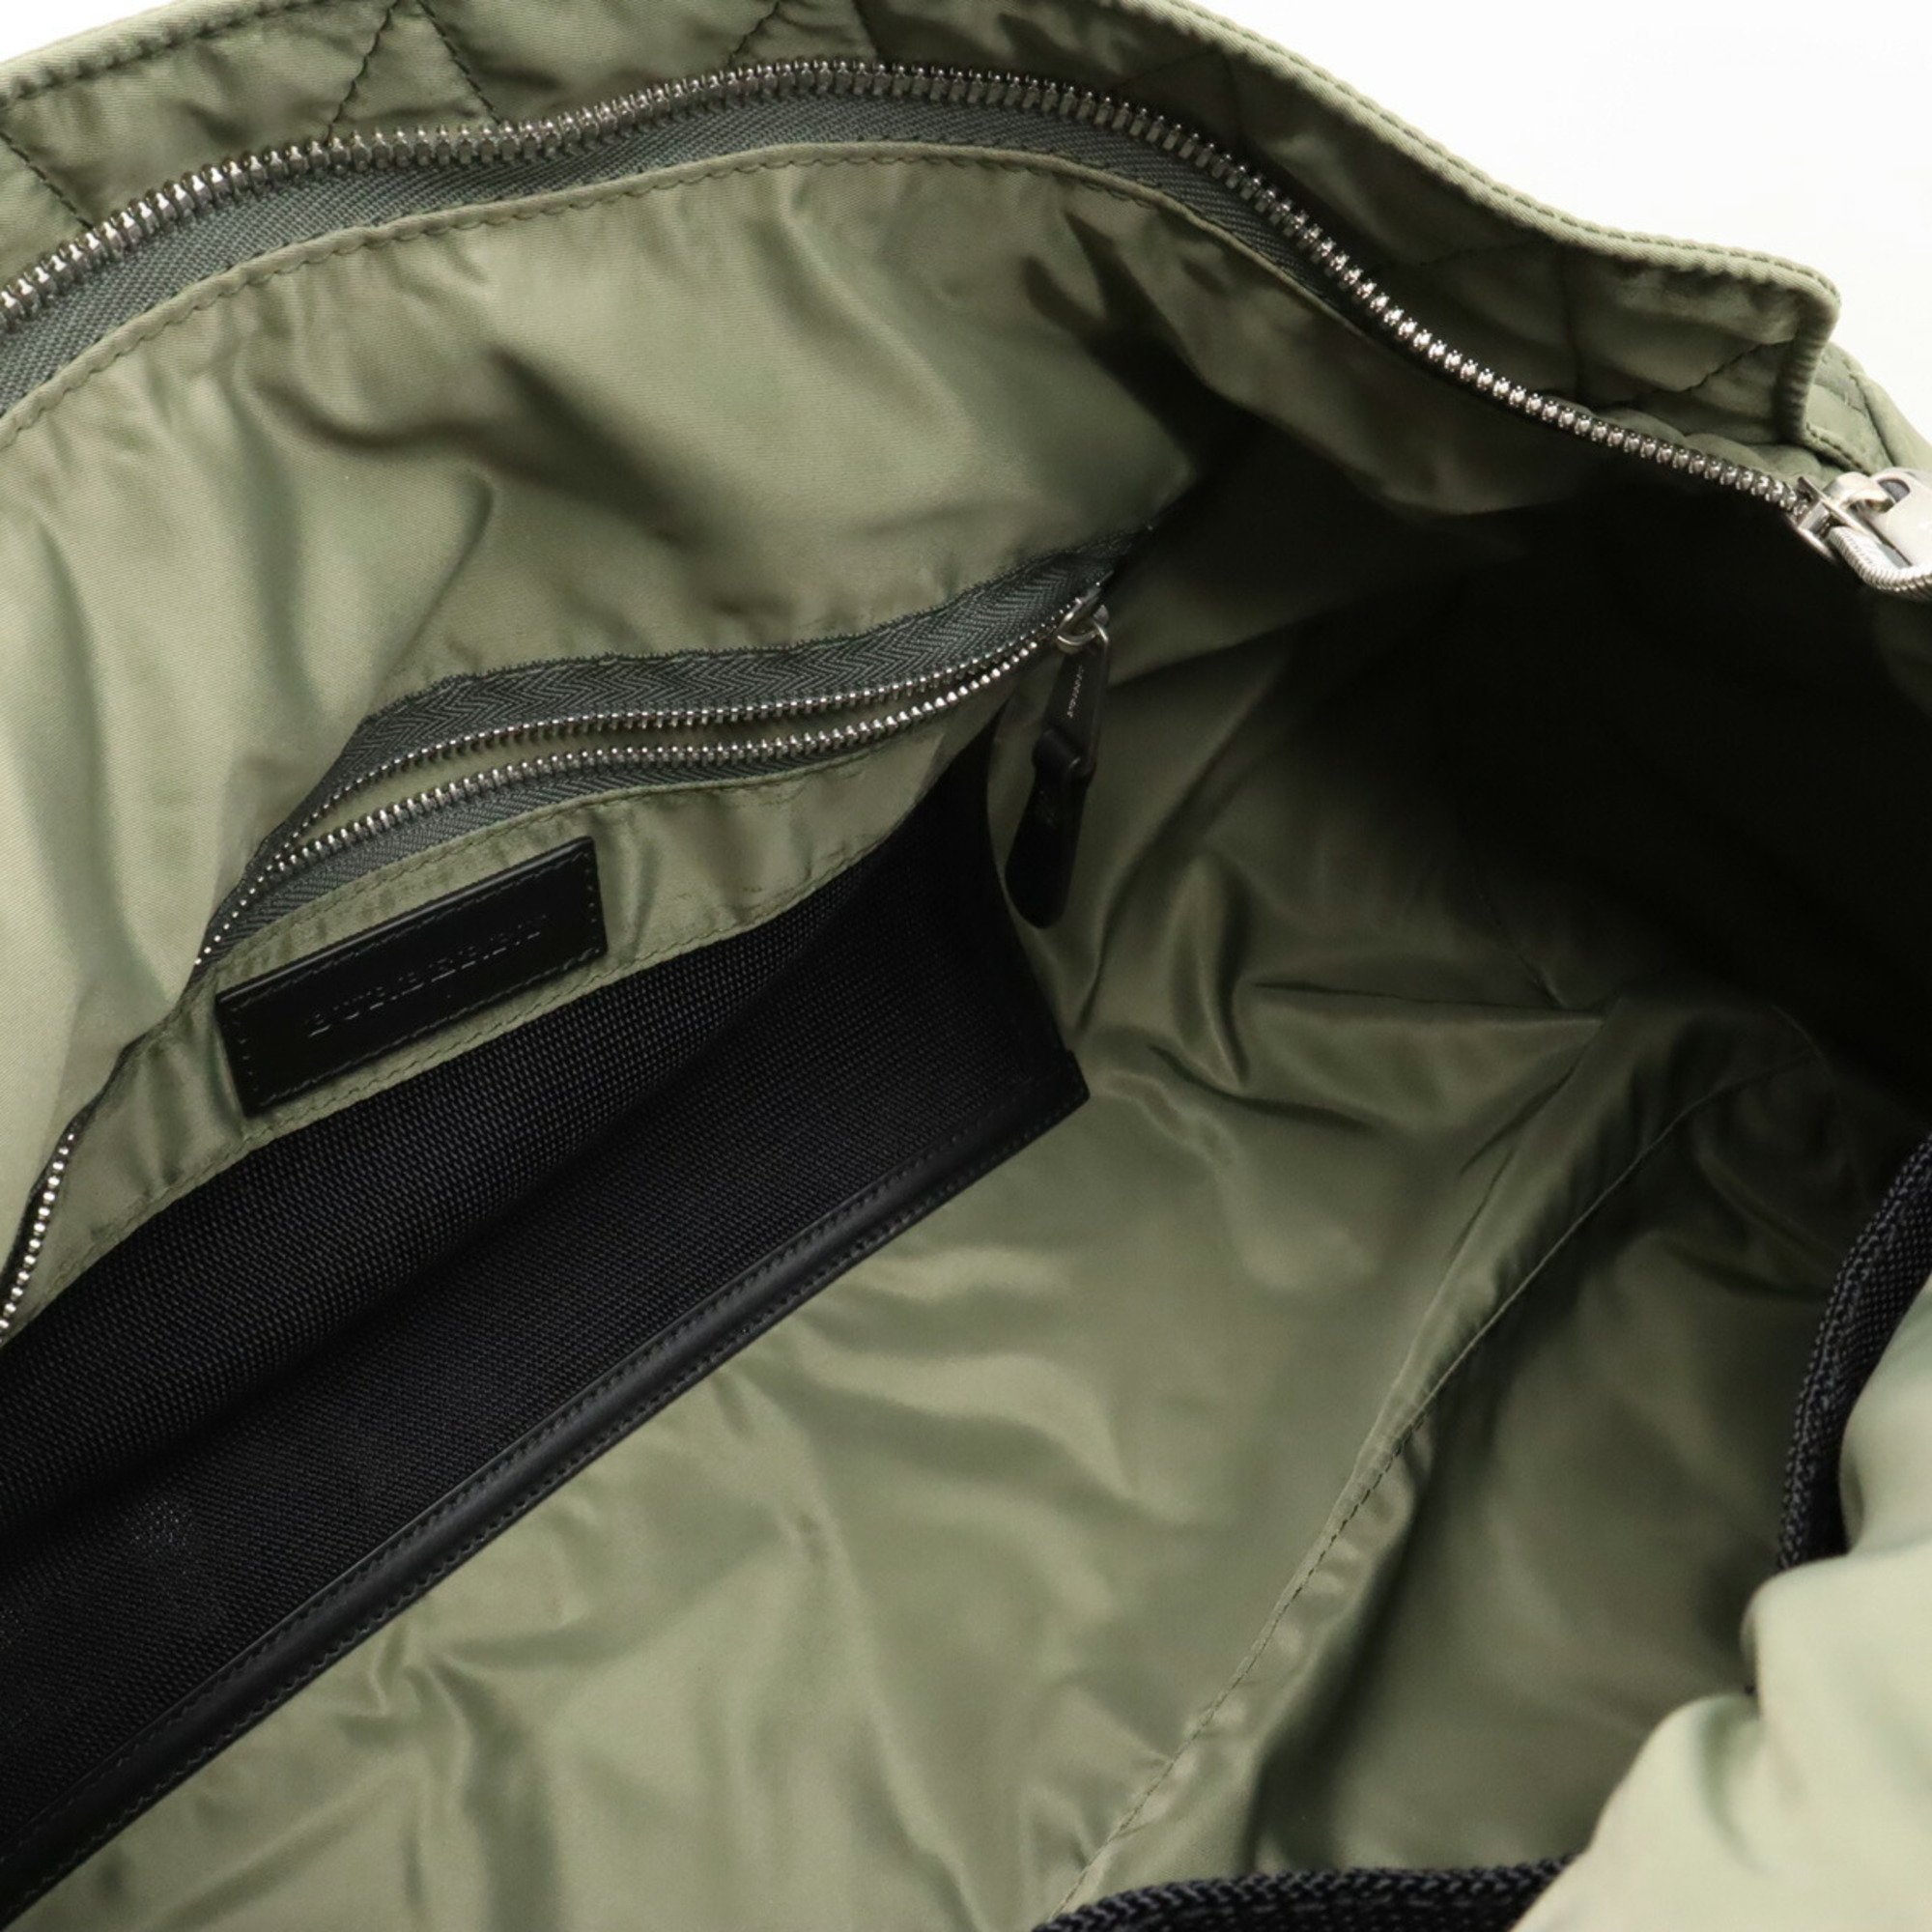 BURBERRY Boston bag, travel nylon, leather, khaki, black